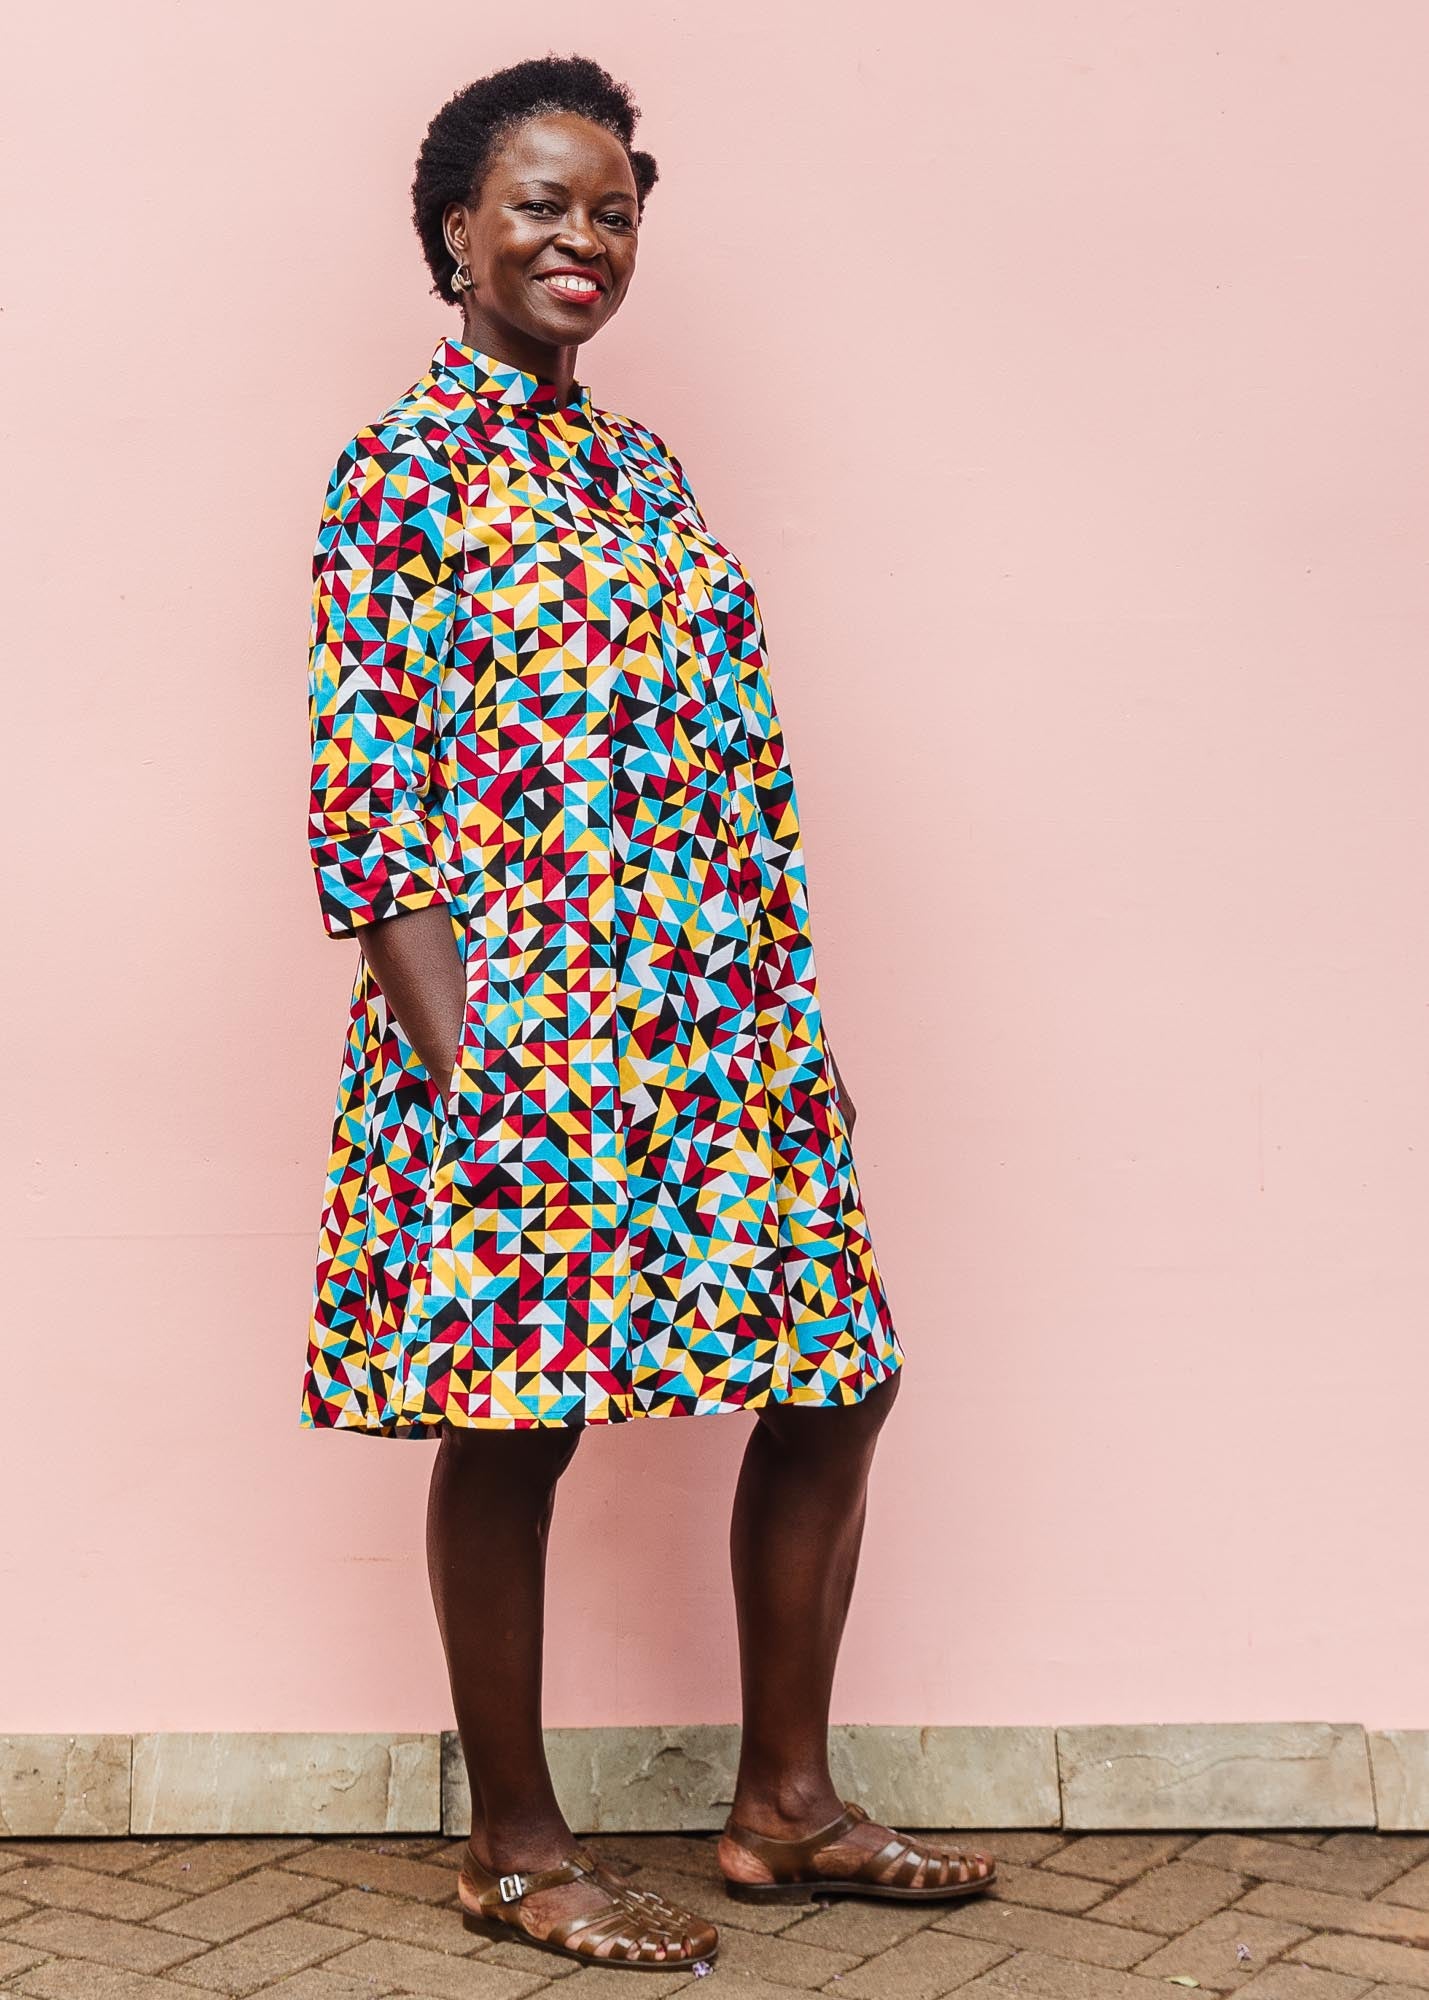 The model is wearing multi colored geometric print dress